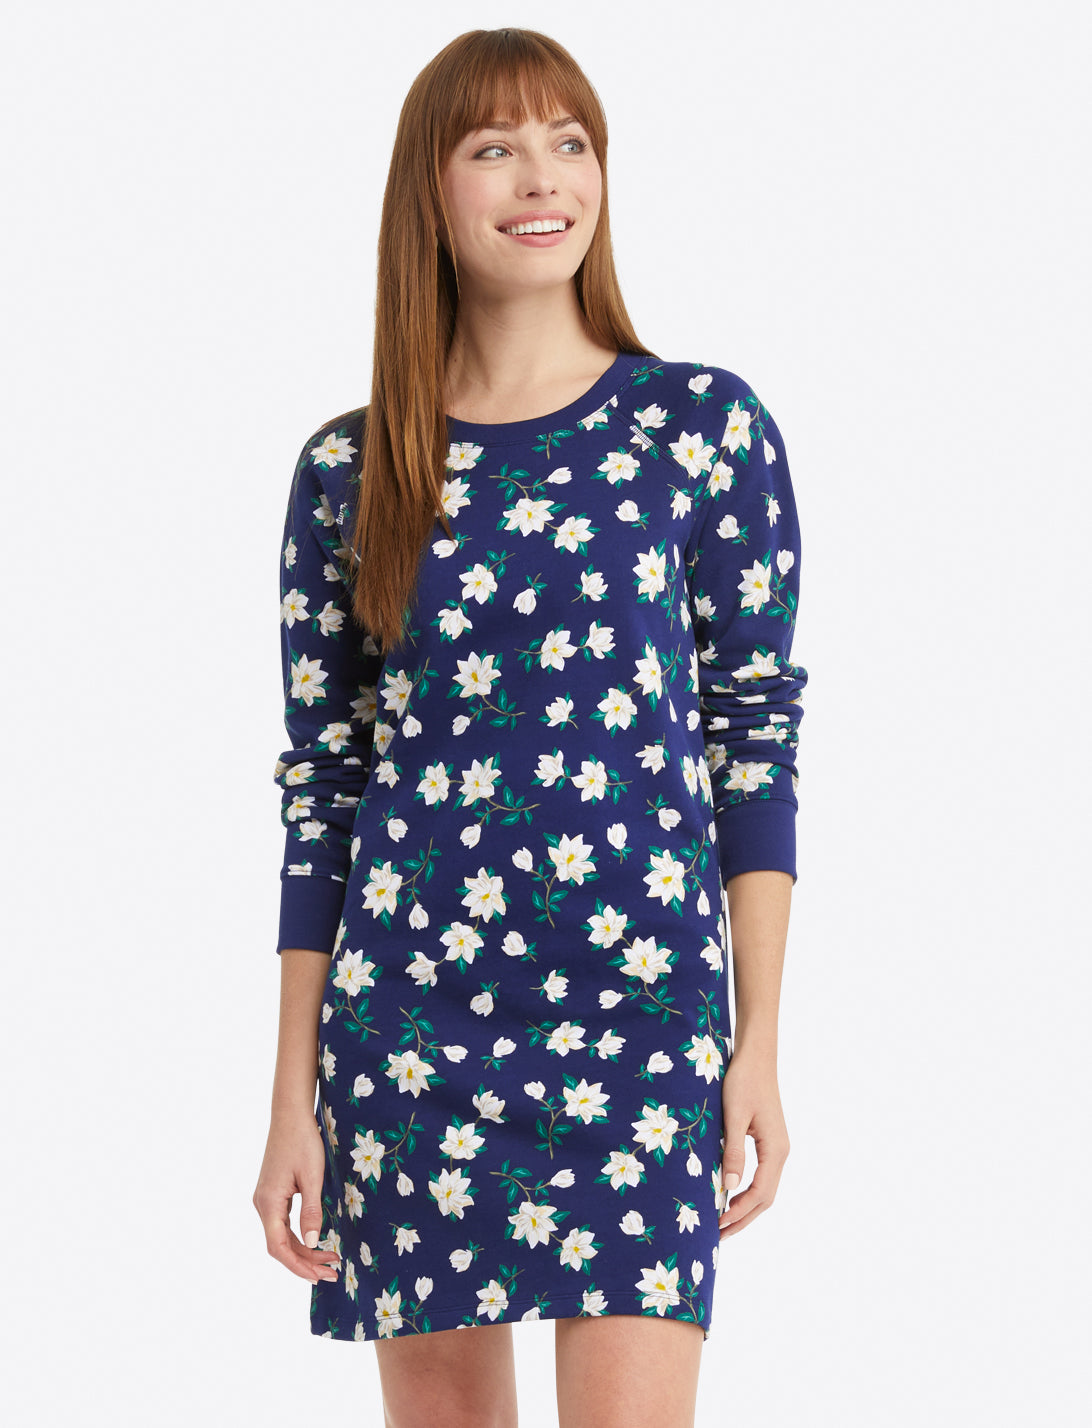 Natalie Sweatshirt Dress in Magnolia